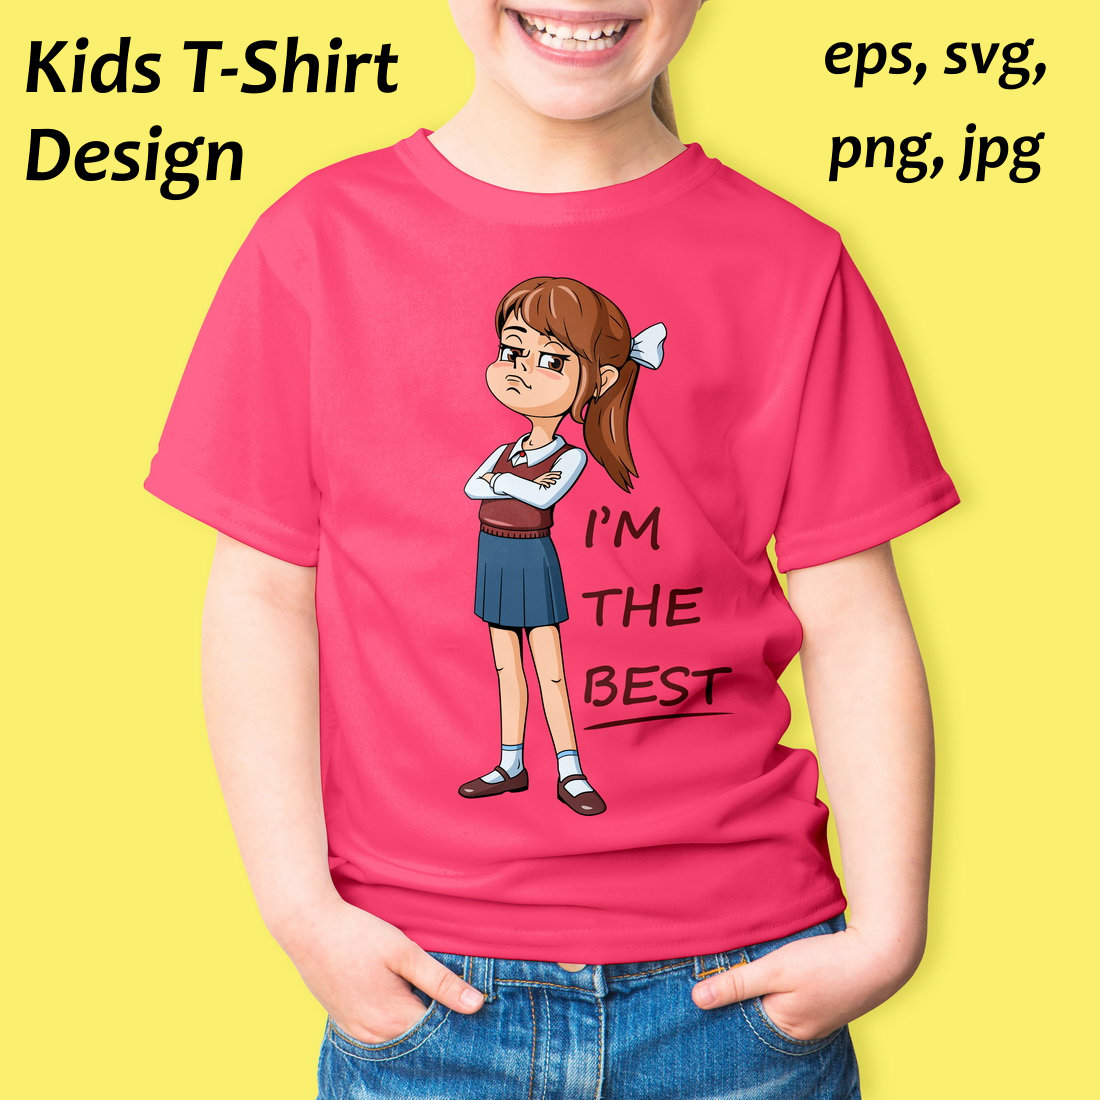 The Best Schoolgirl Sublimation Kids T-Shirt Design cover image.